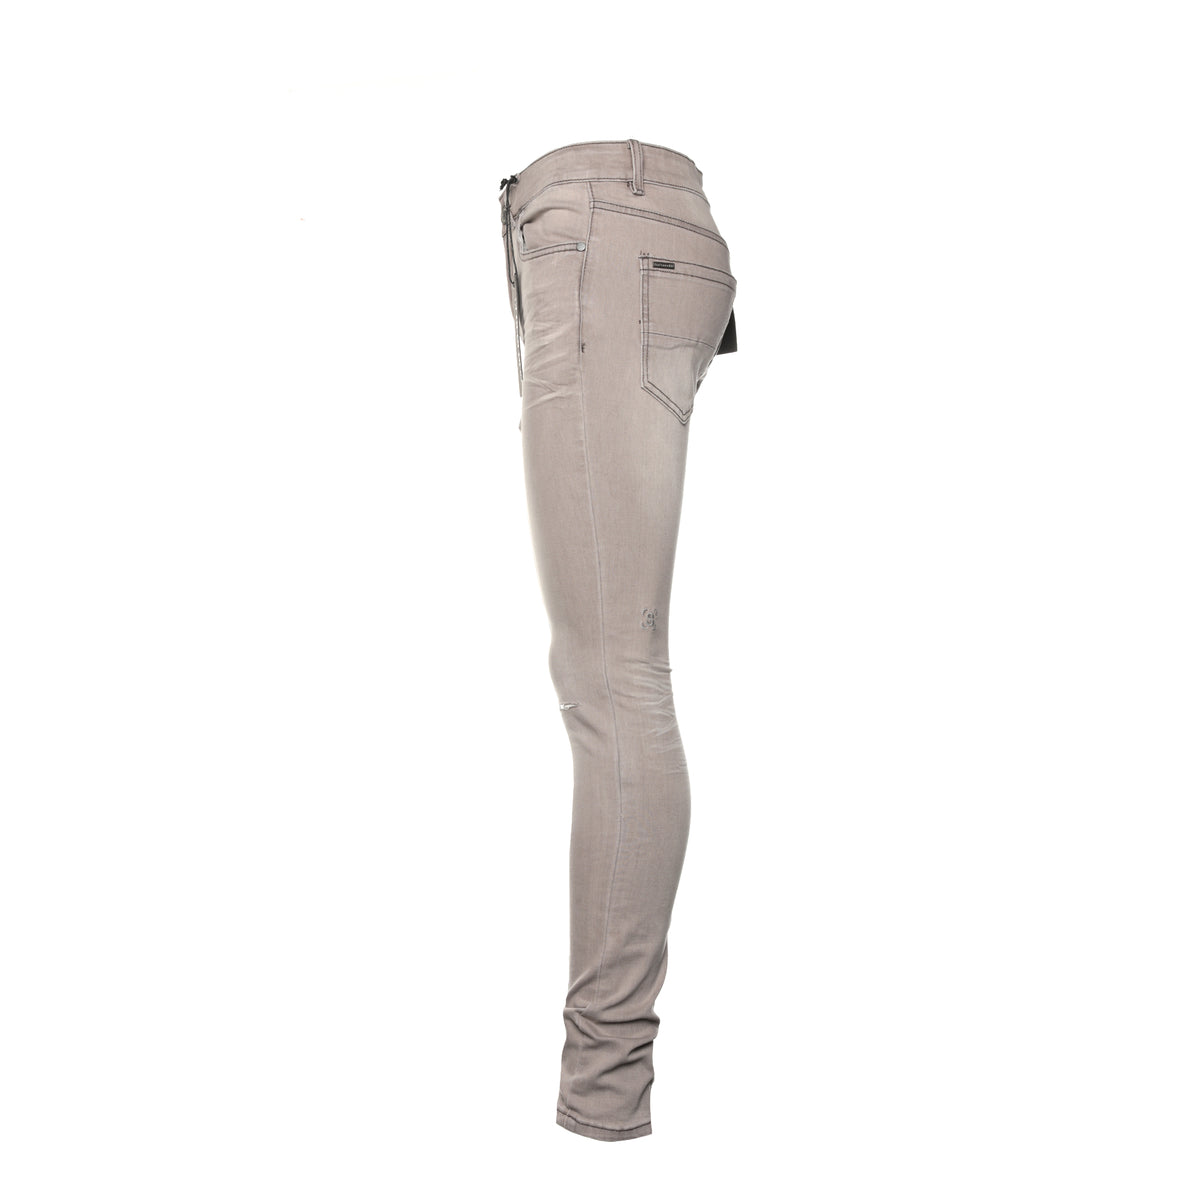 Serenede "Marine Layer" Men's Grey Jeans - SIZE Boutique